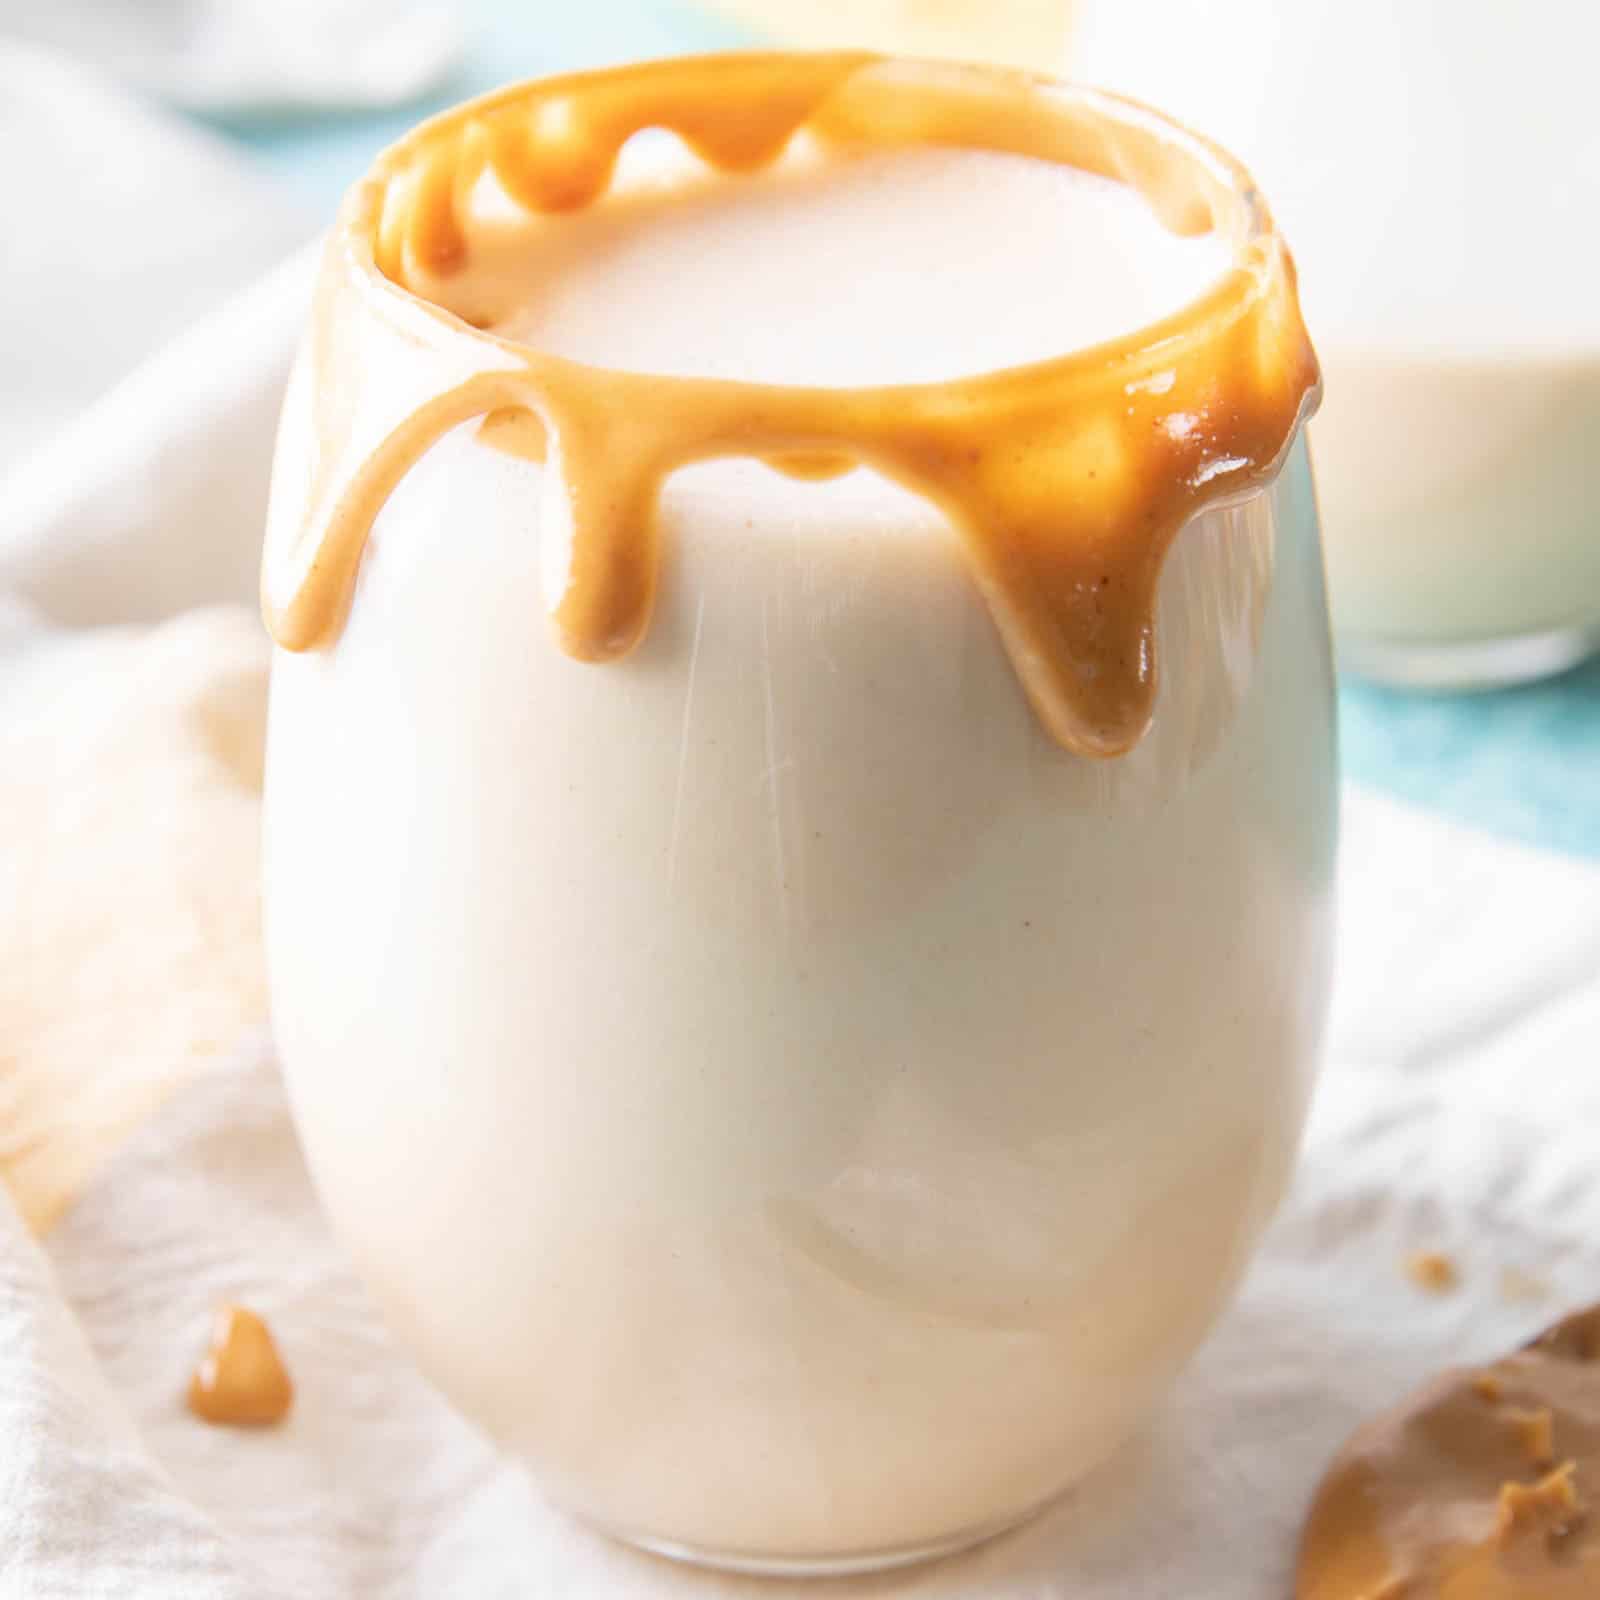 Peanut Butter Protein Shake – 4 ingredients!